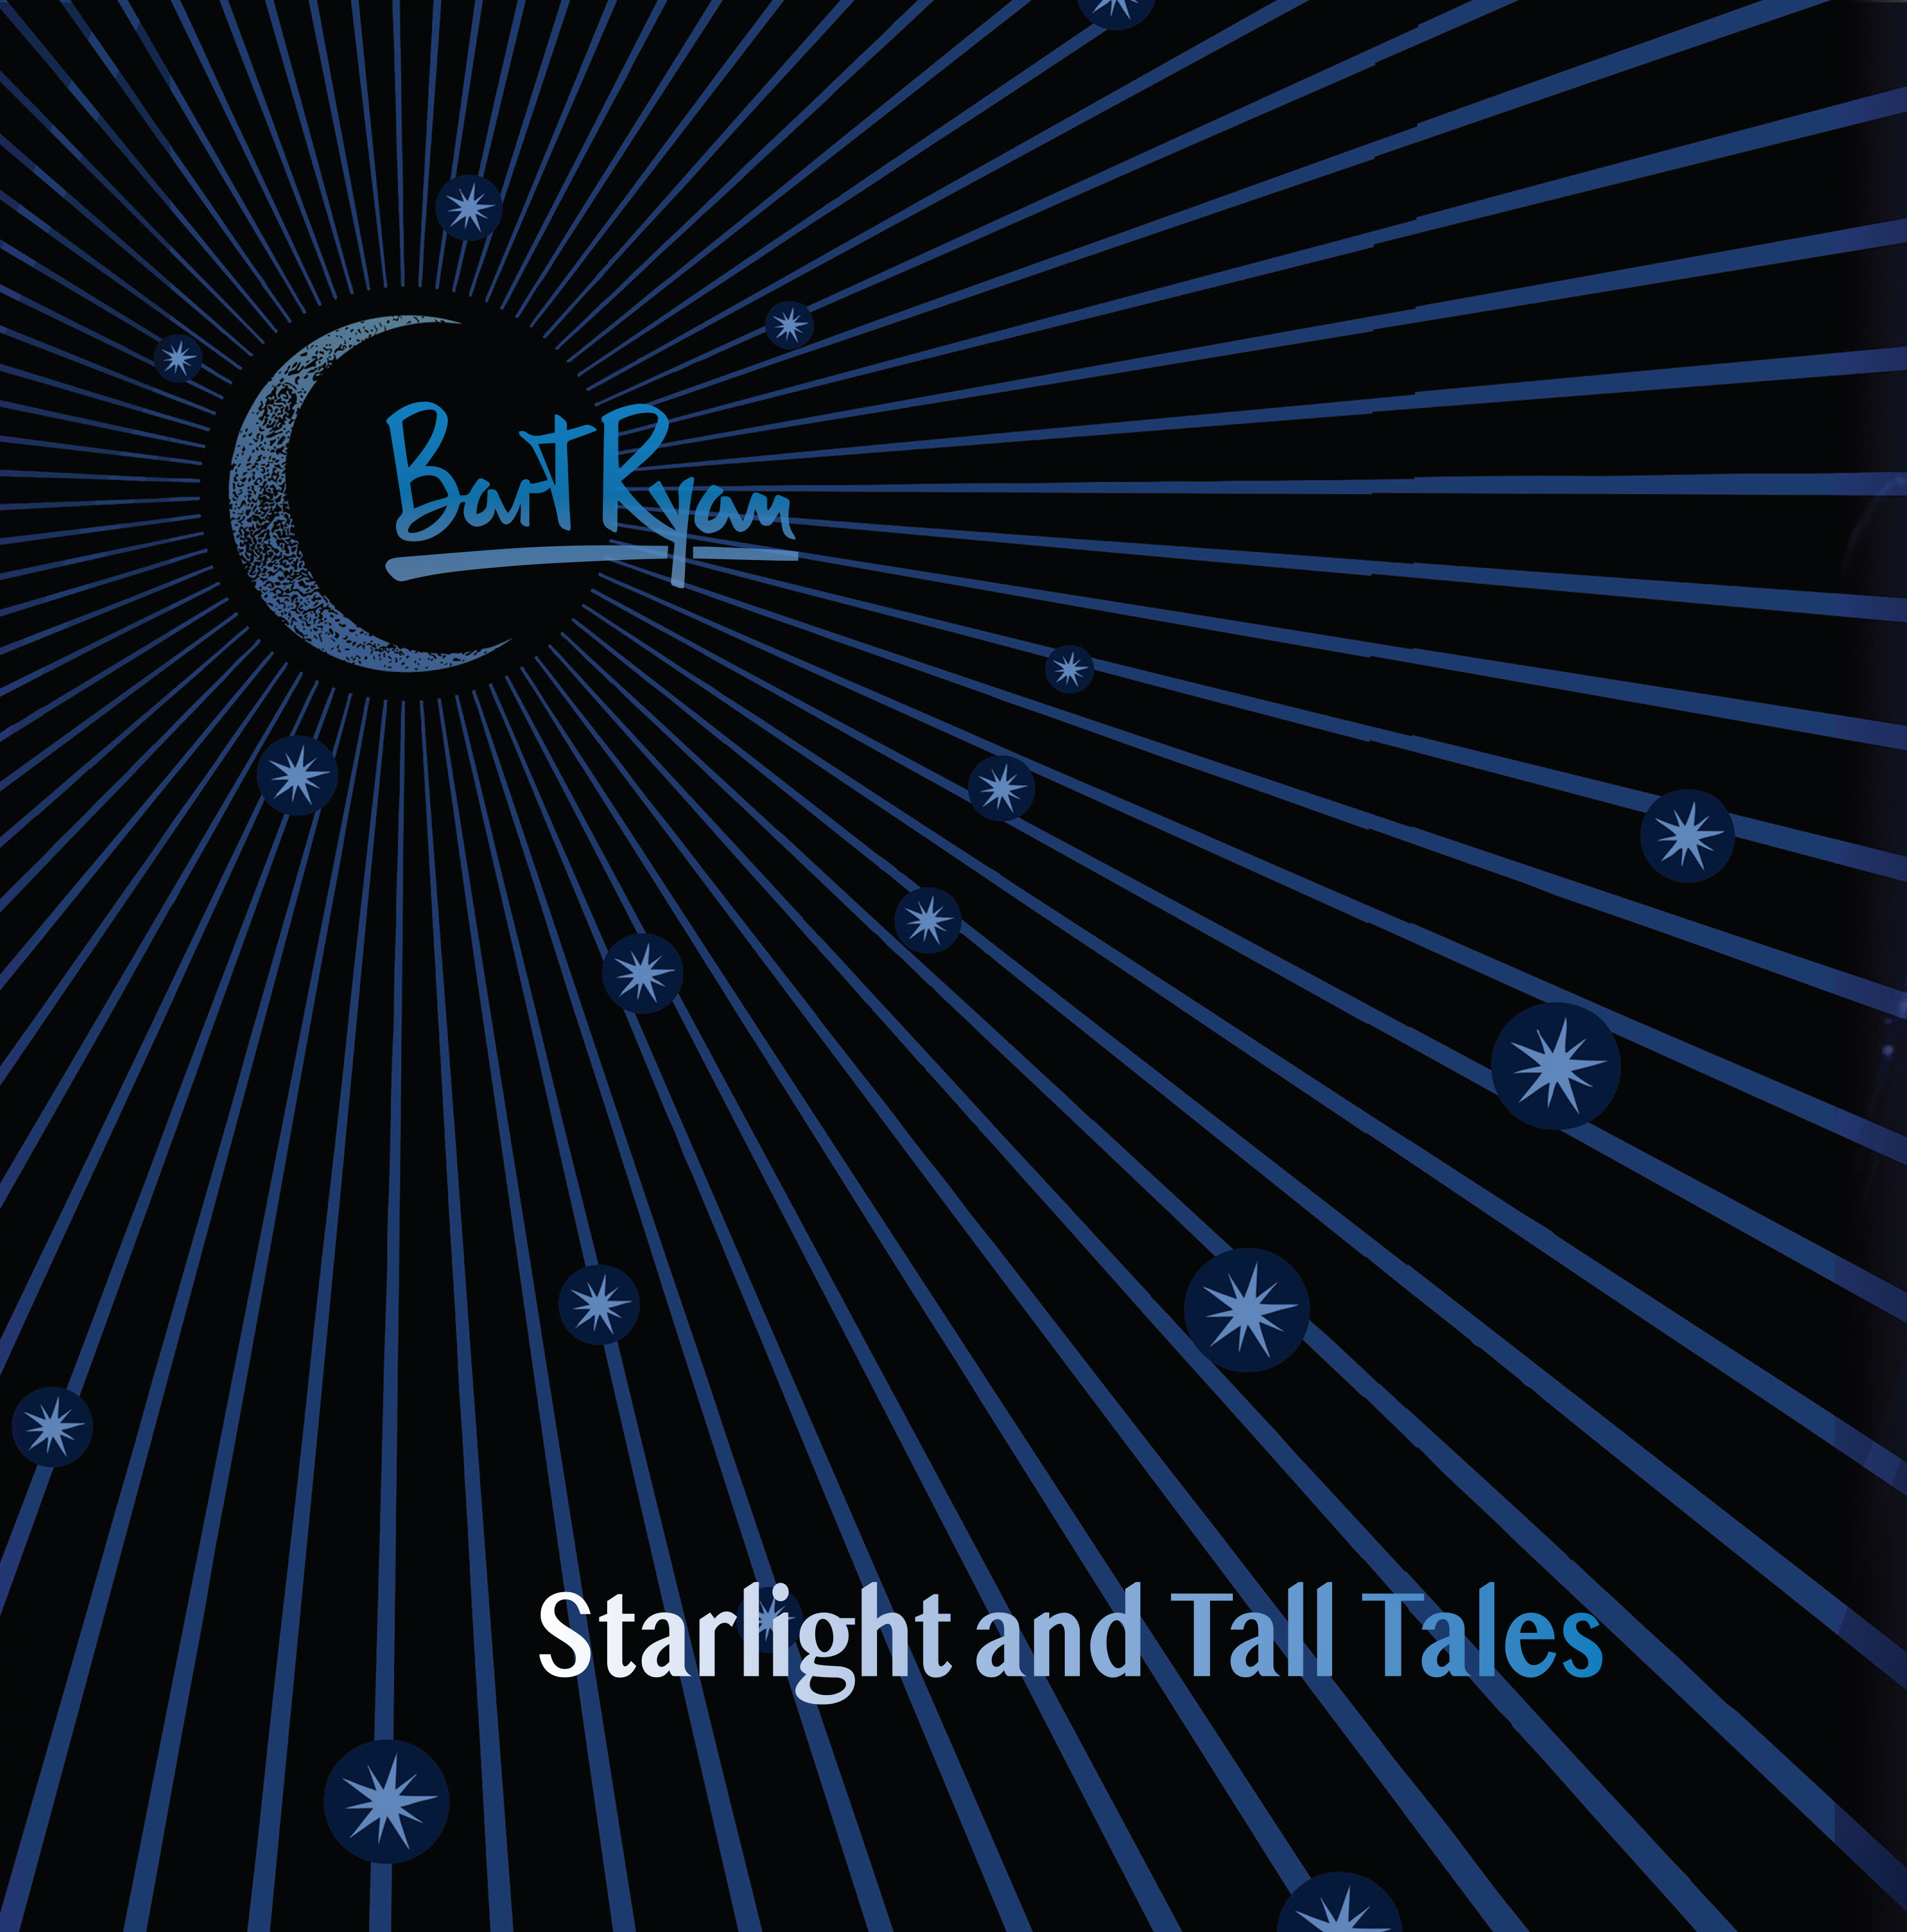 Starlight and Tall Tales - Bart Ryan